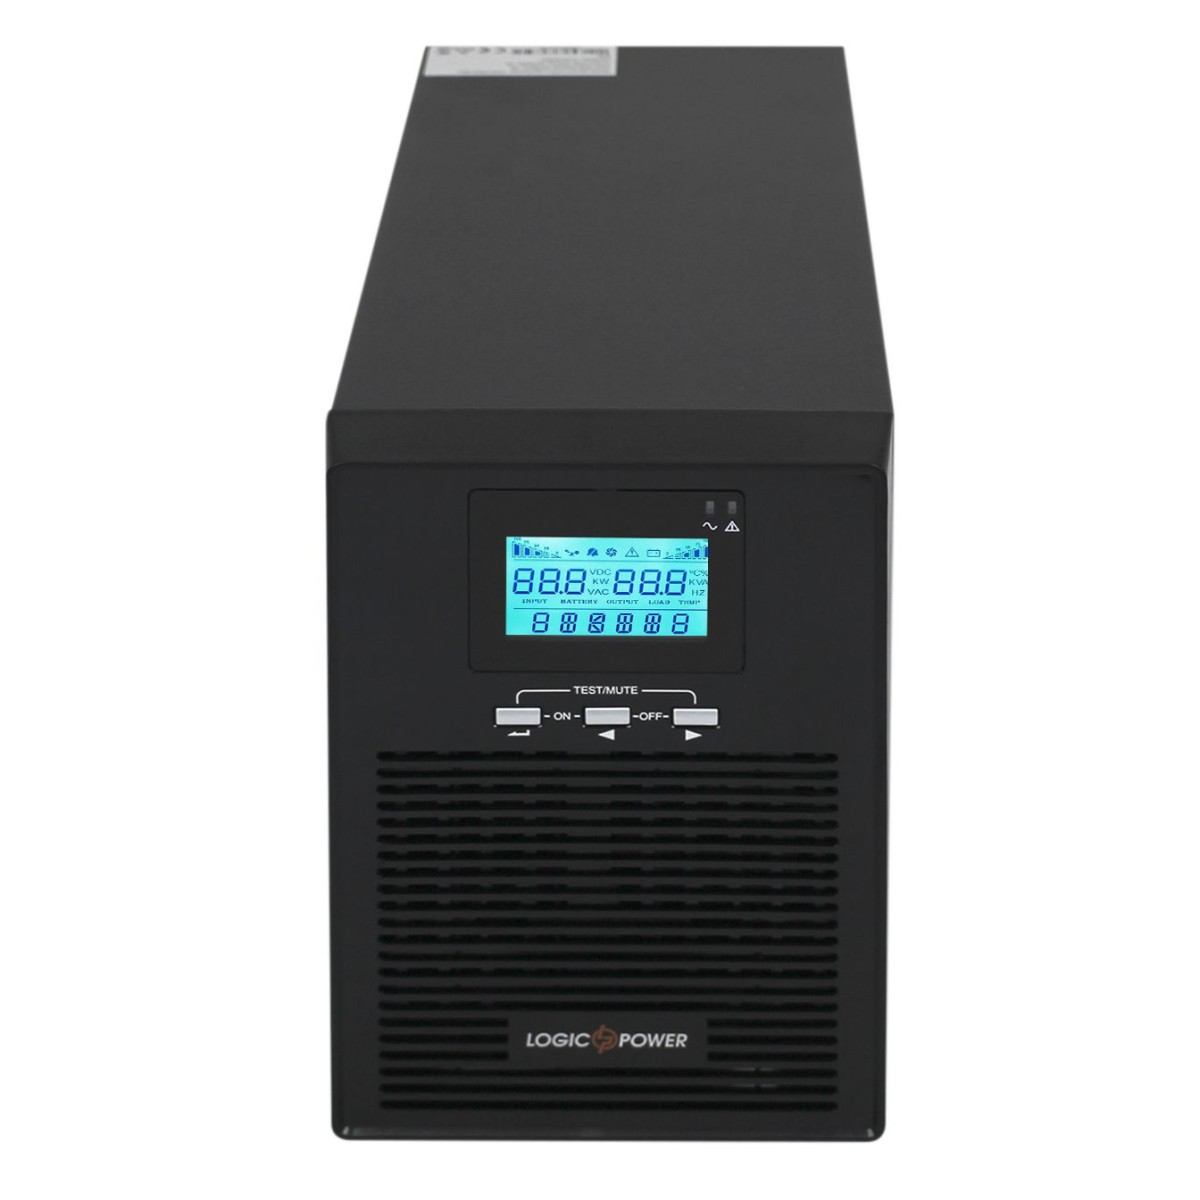 ИБП Smart-UPS LogicPower-1000 PRO 36V (without battery) 98_98.jpg - фото 1